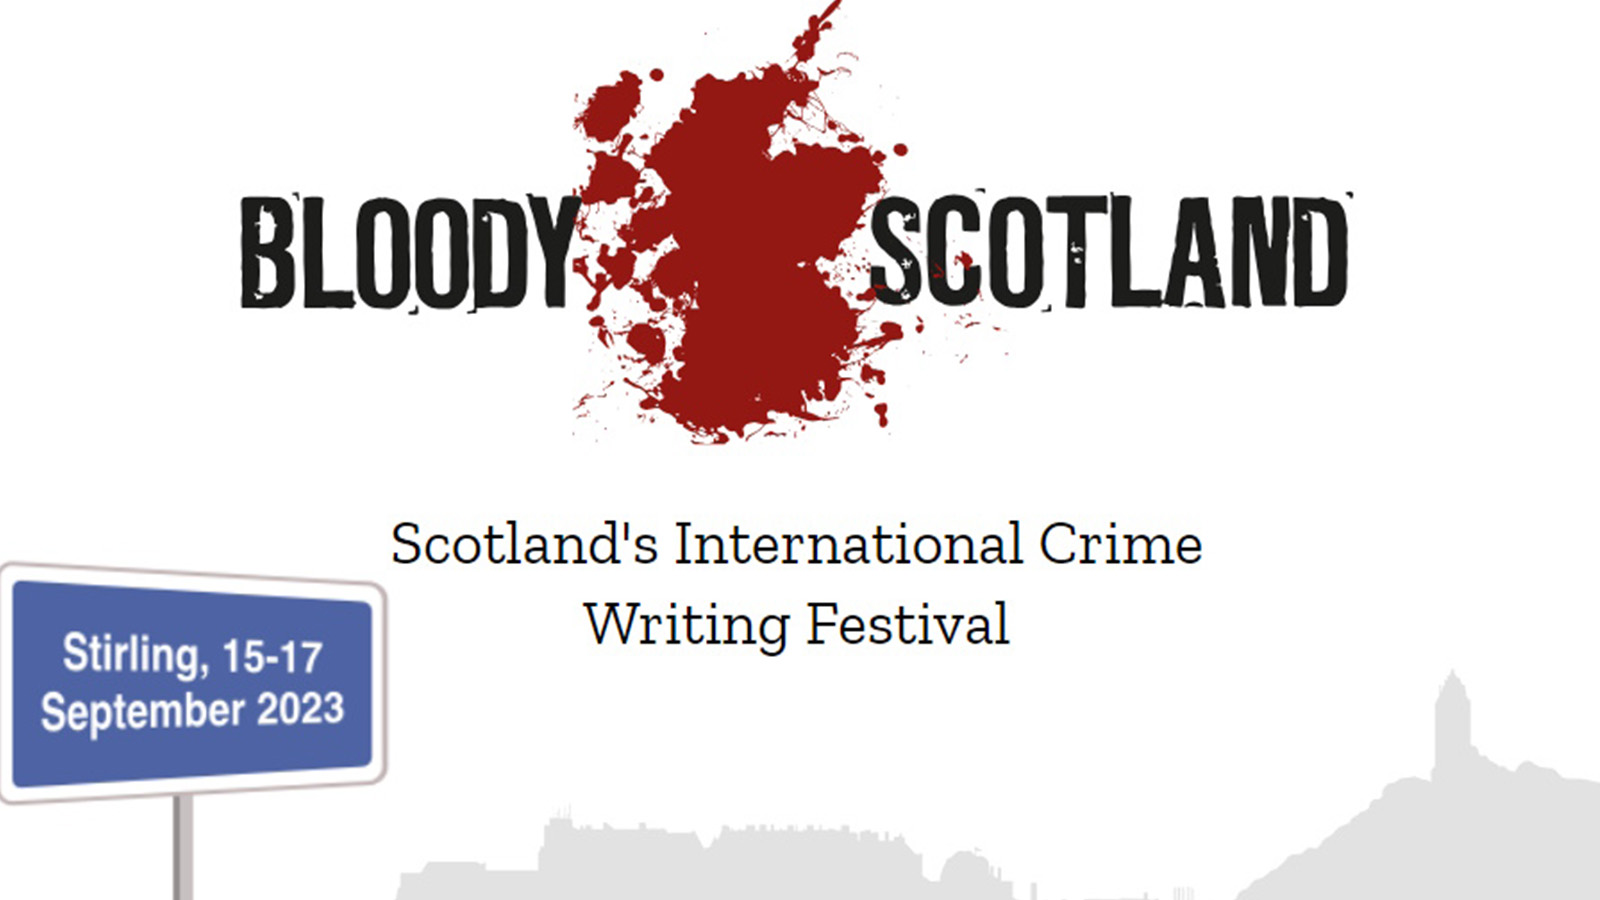 Bloody Scotland - Scotland's International Crime Writing Festival. Stirling 15 to 17 September 2023.